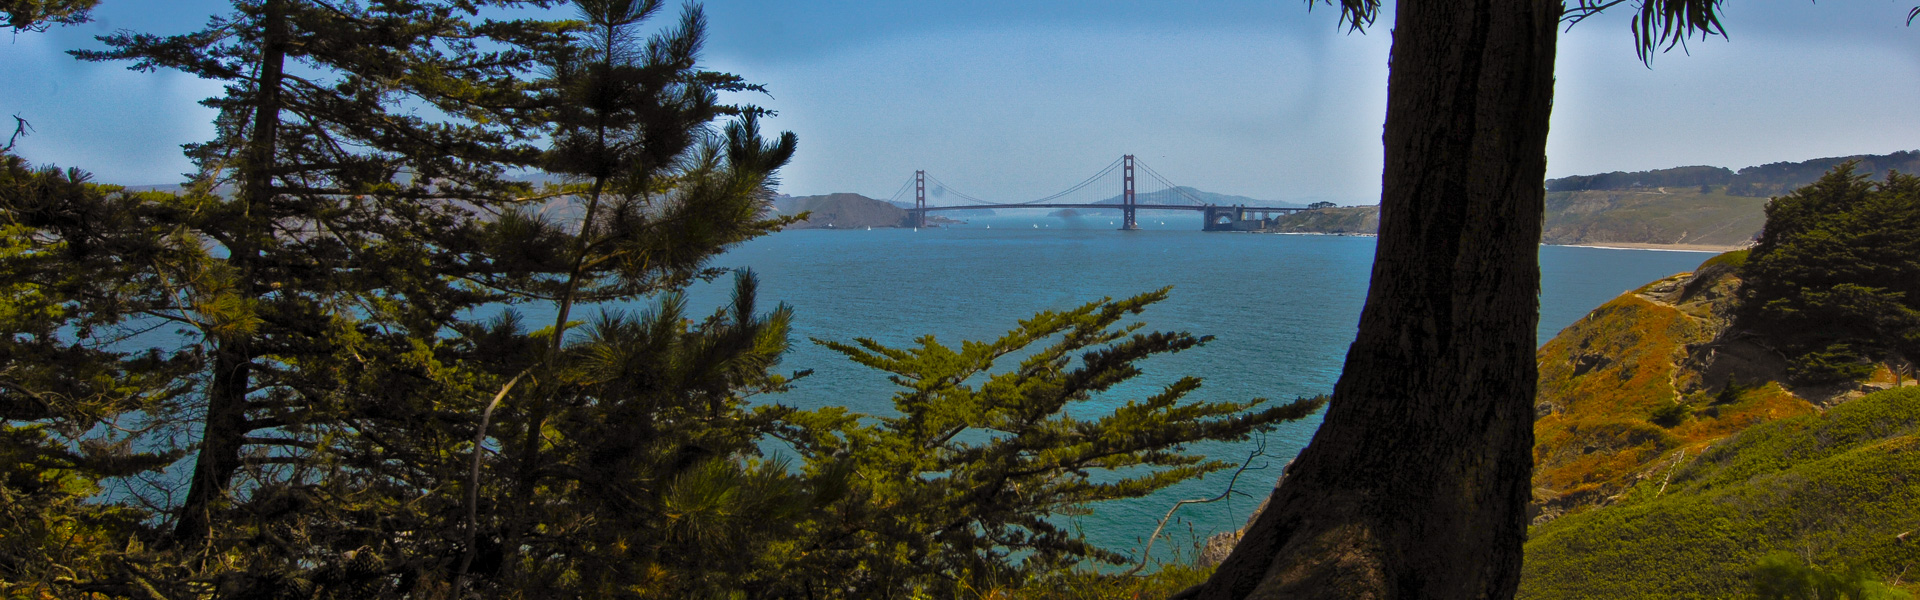 Golden Gate Bridge, view from Mile Rock Beach